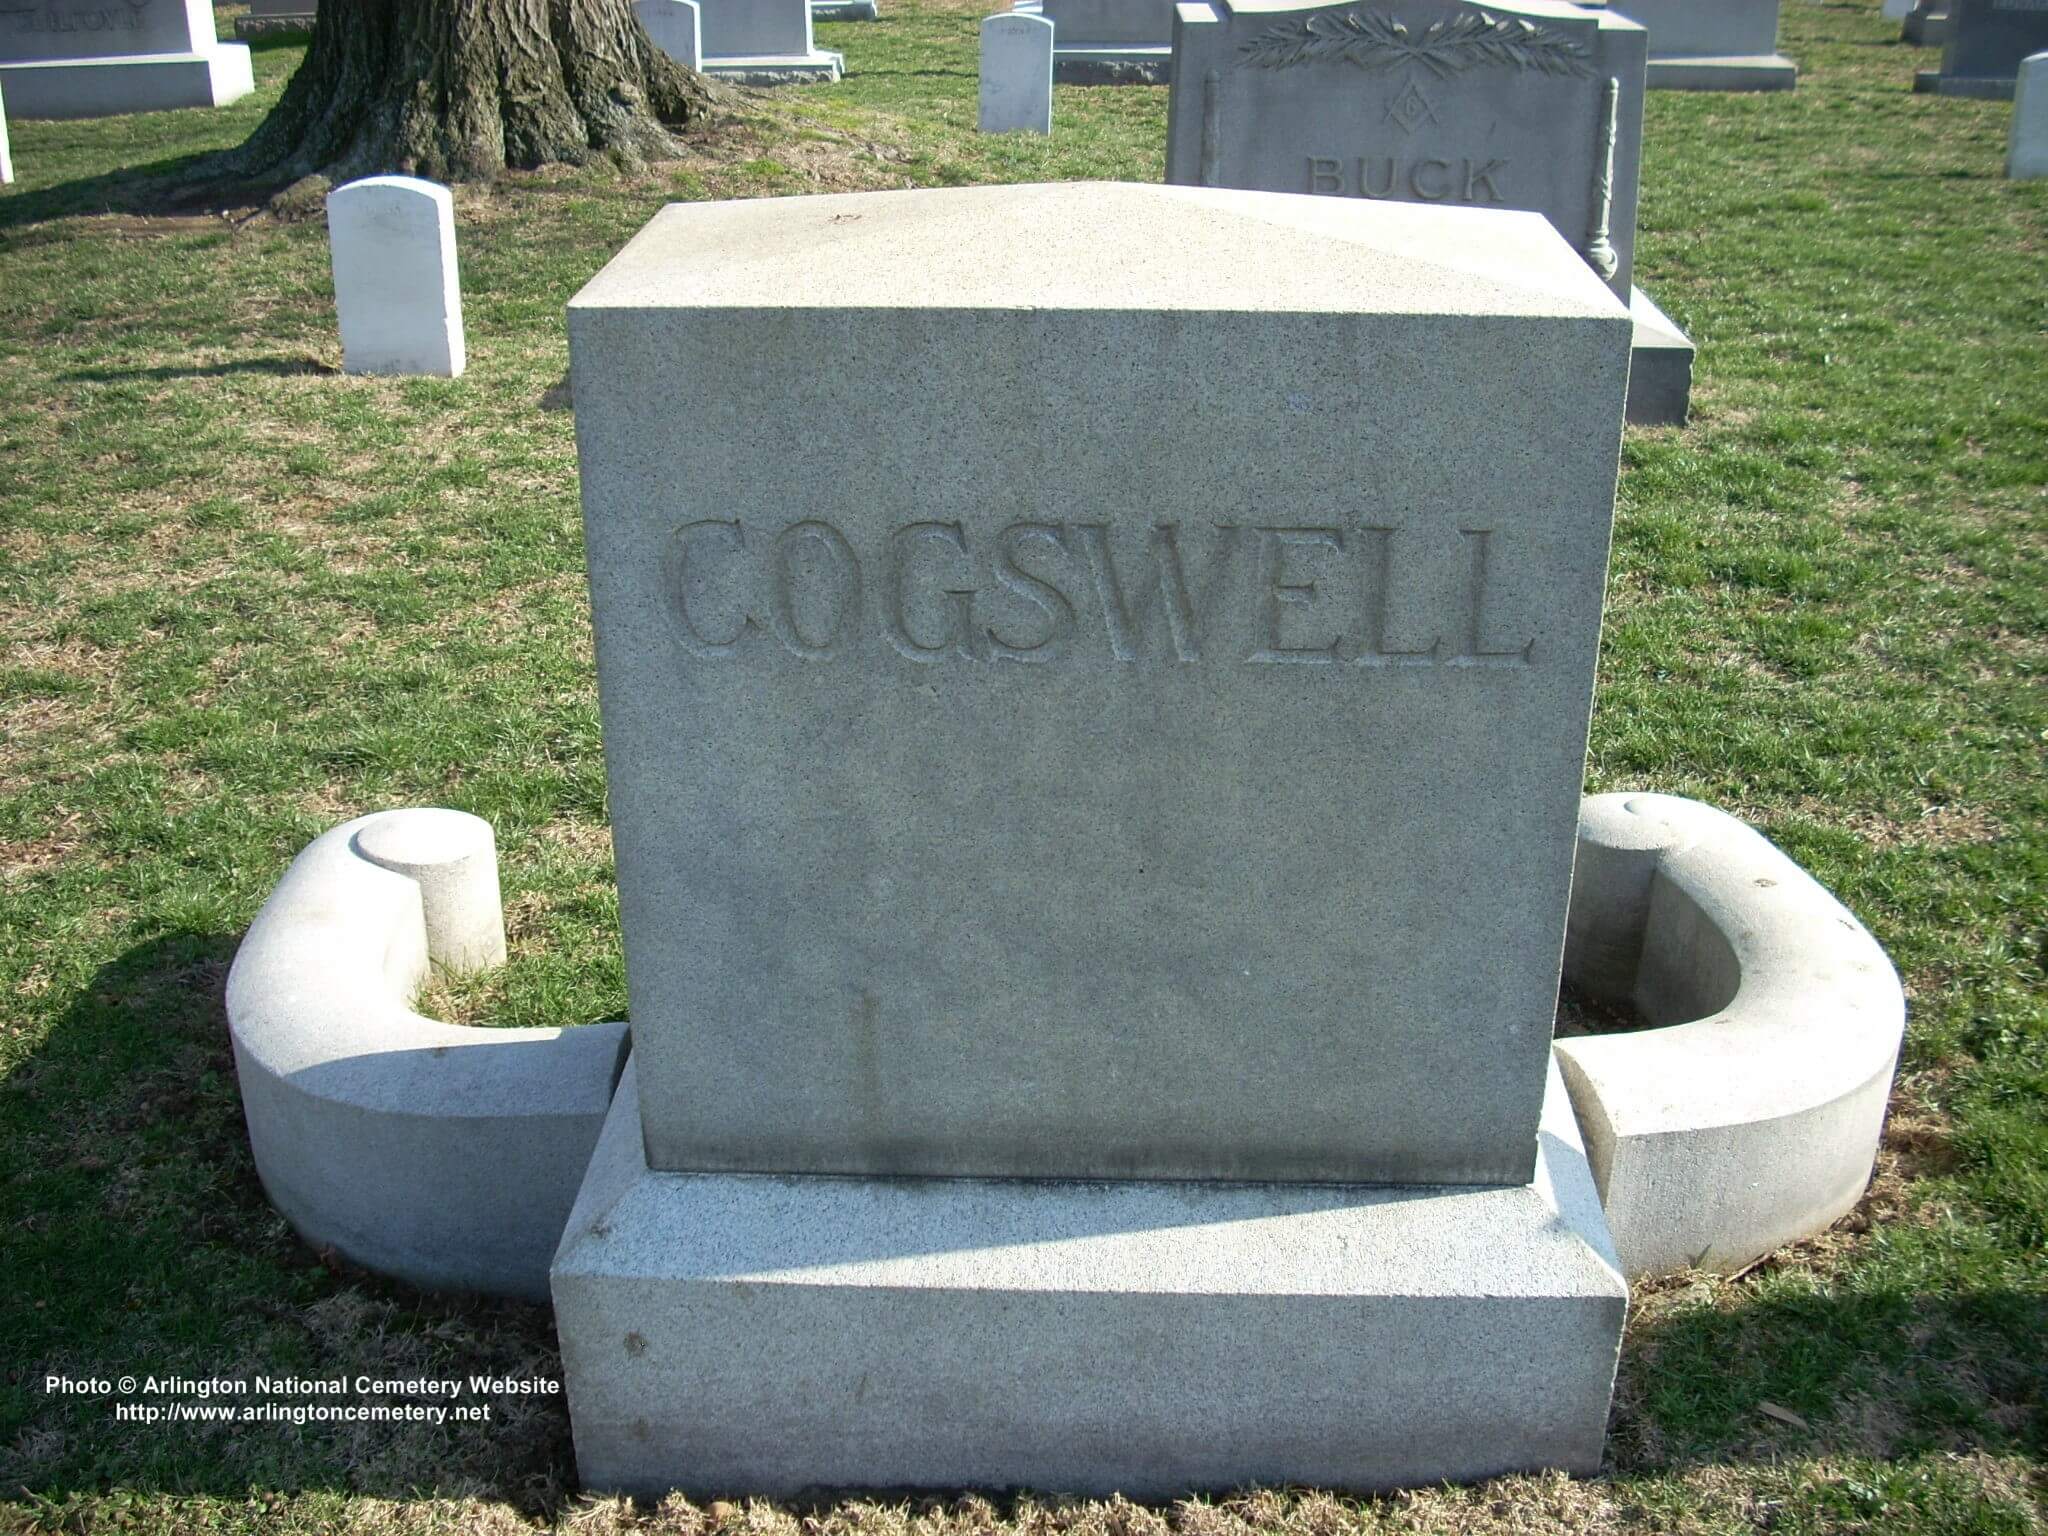 milton-cogswell-gravesite-photo-sec3-march-2008-002